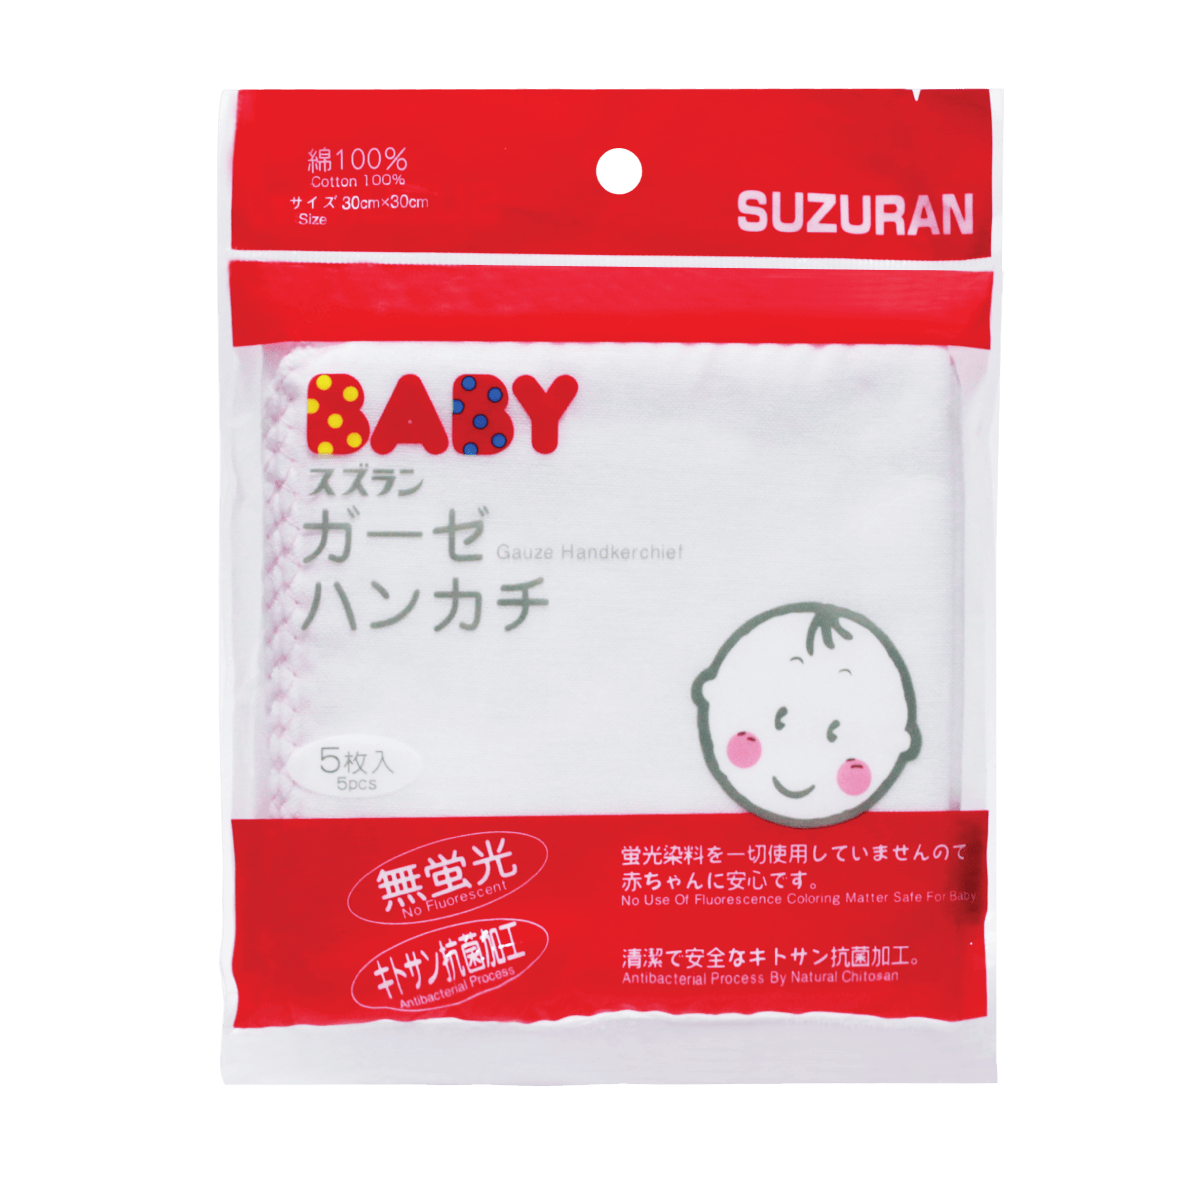 Suzuran Baby Gauze Handkerchief for newborn baby